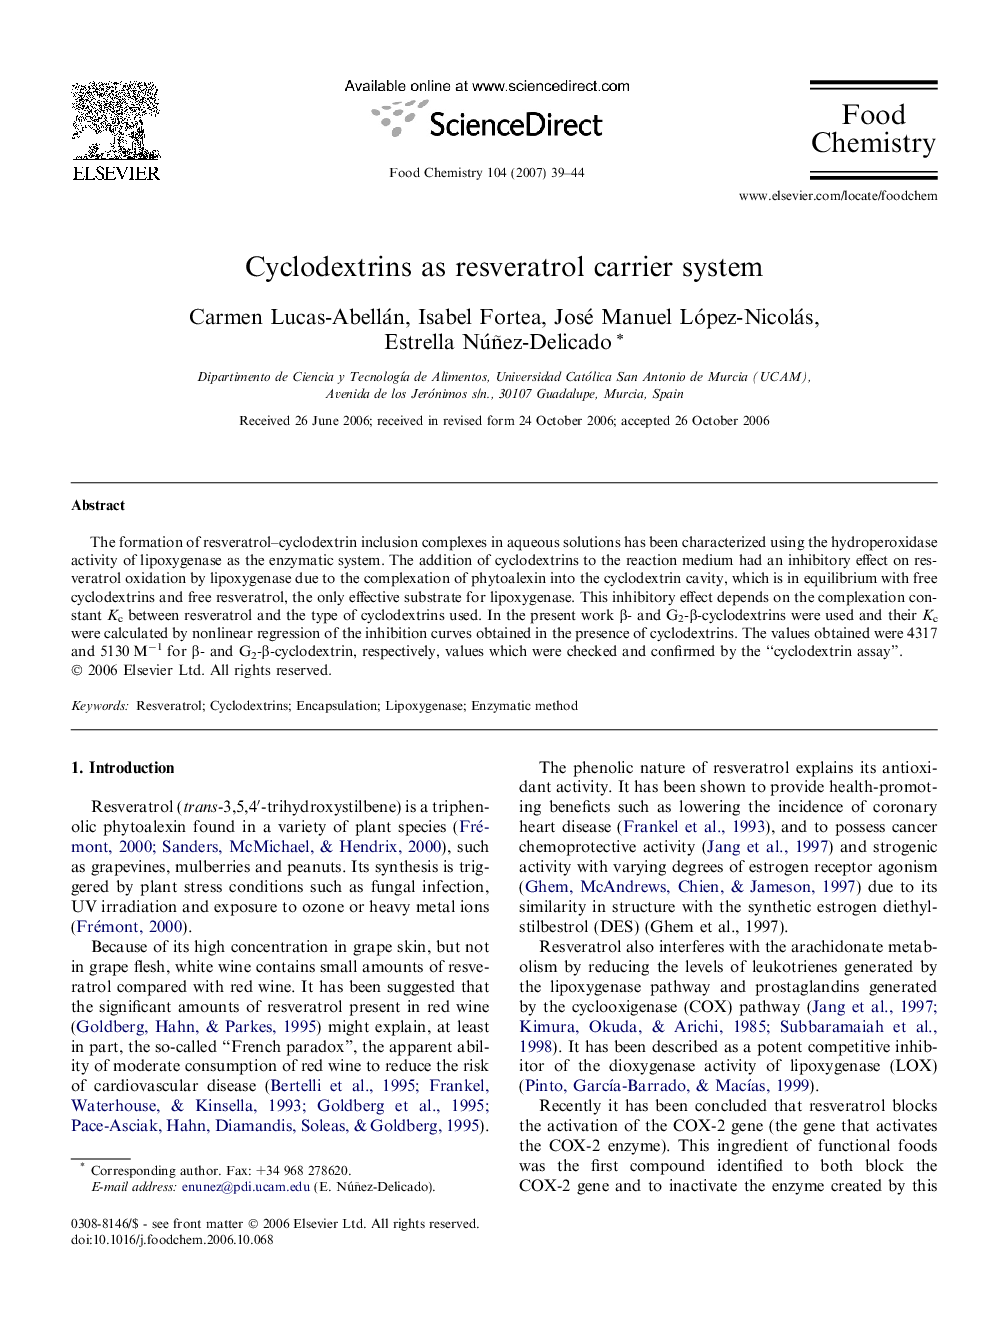 Cyclodextrins as resveratrol carrier system